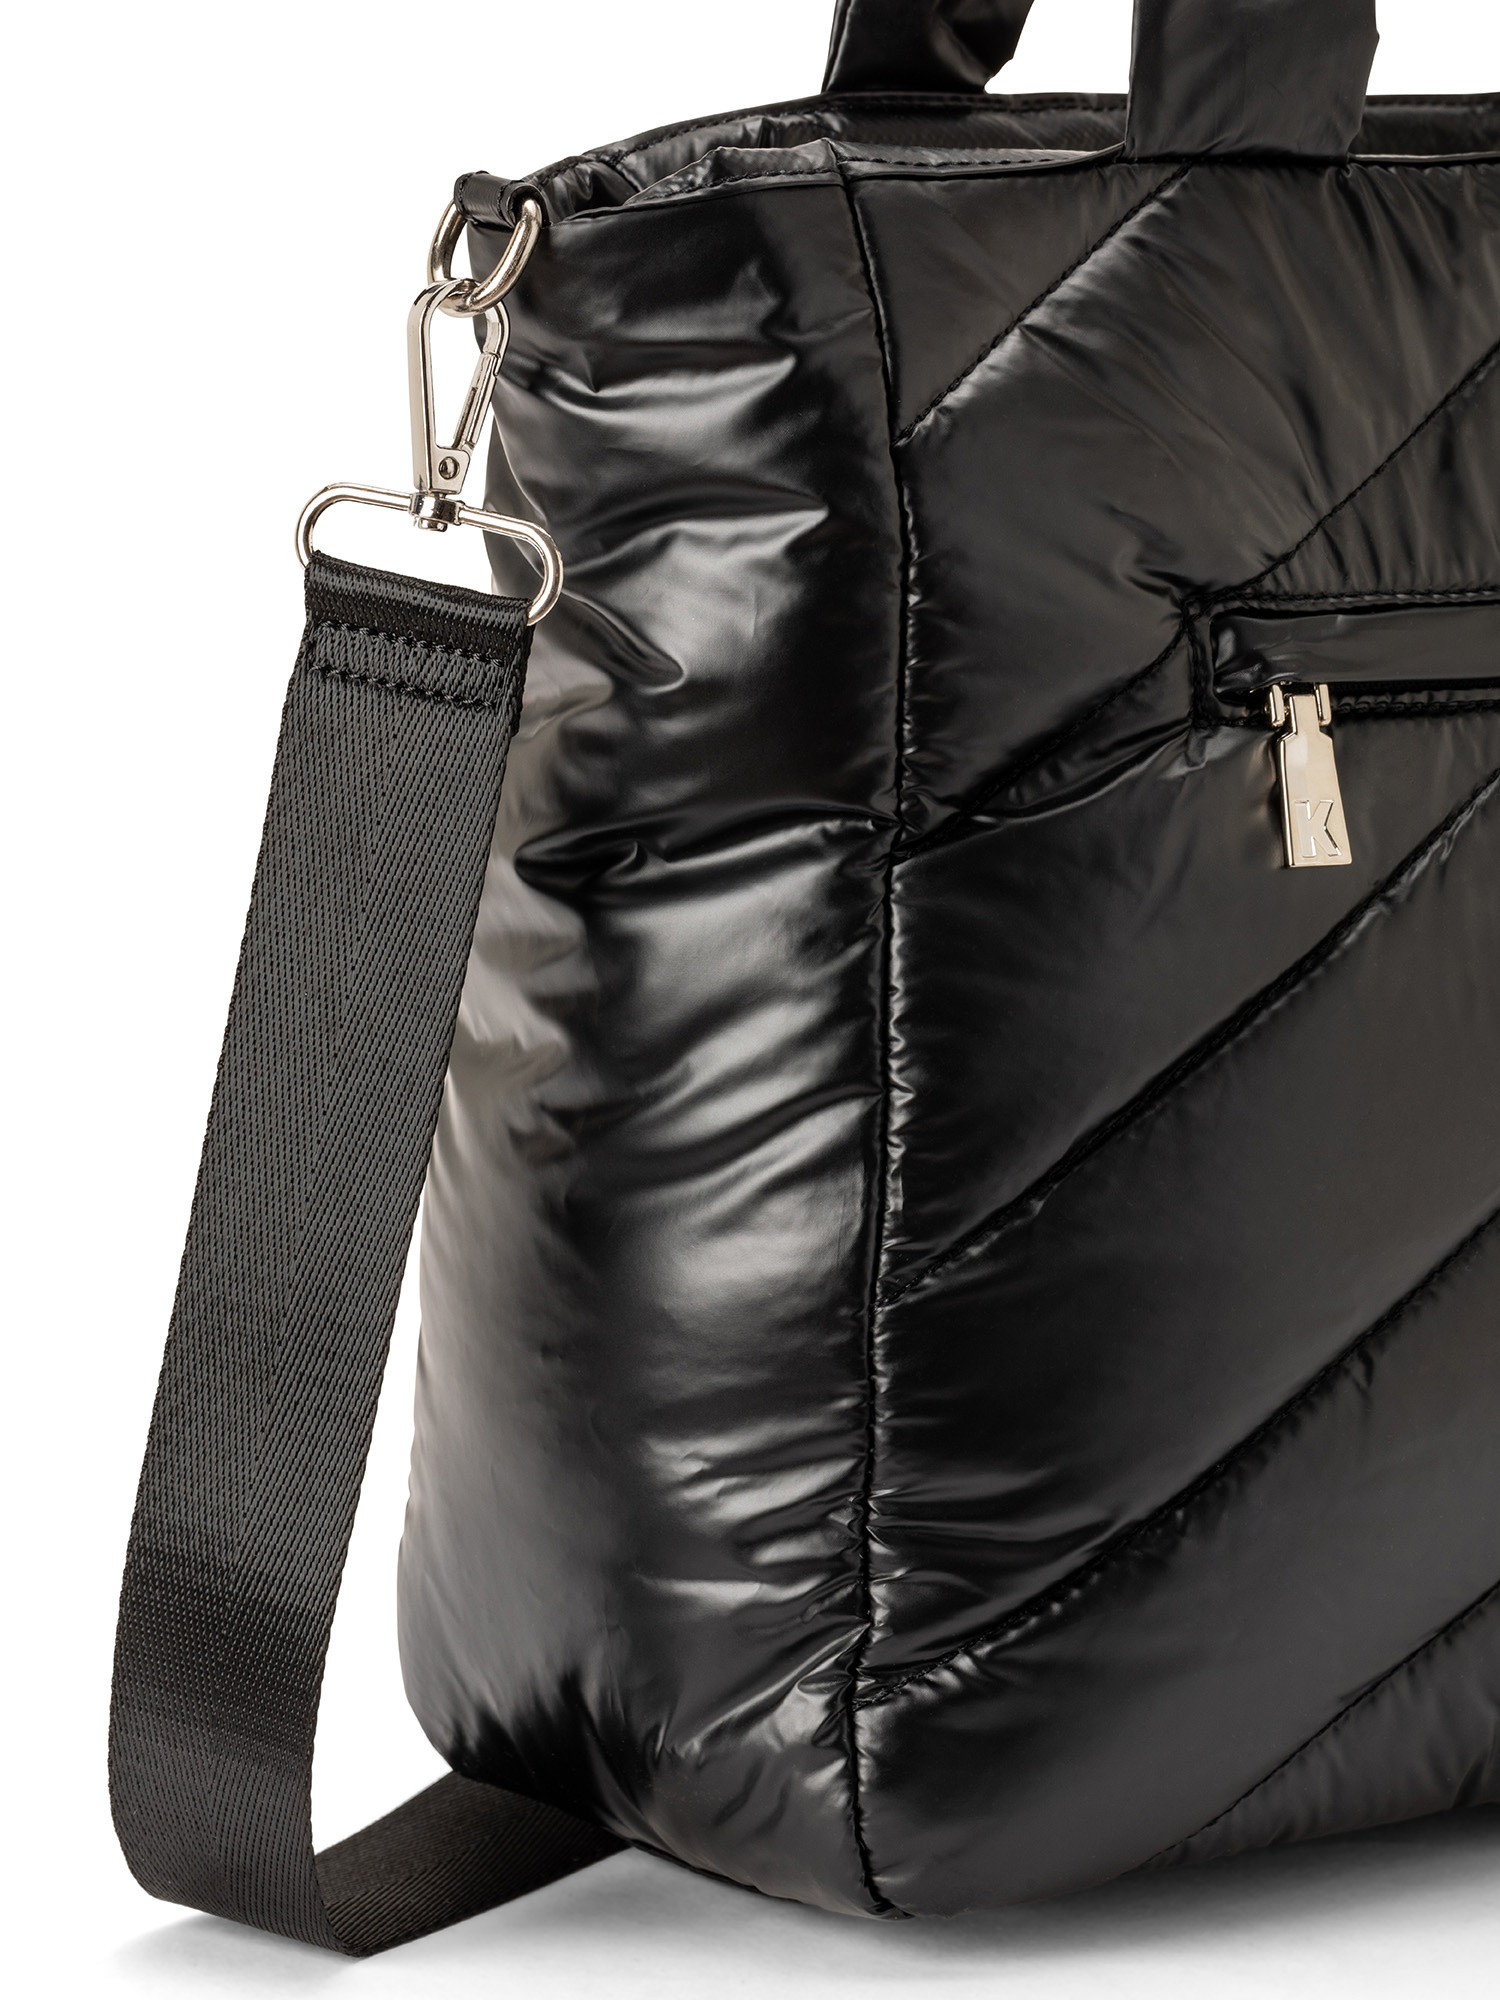 Koan - Nylon shopping bag, Black, large image number 2